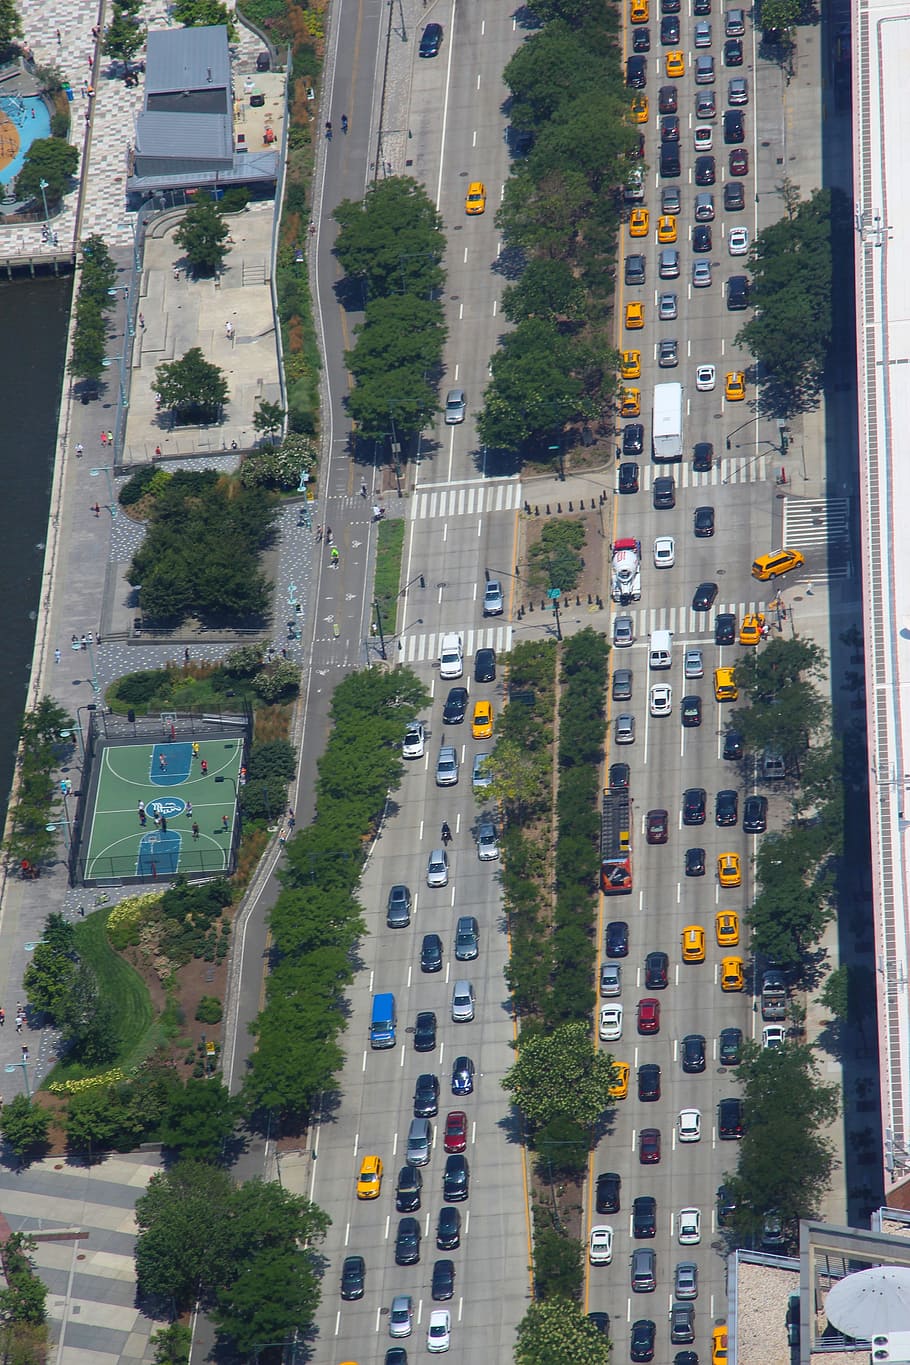 Nova York, York, Rua, Táxi, Amarelo, Tráfego, engarrafamento, carros, perspectiva, acima